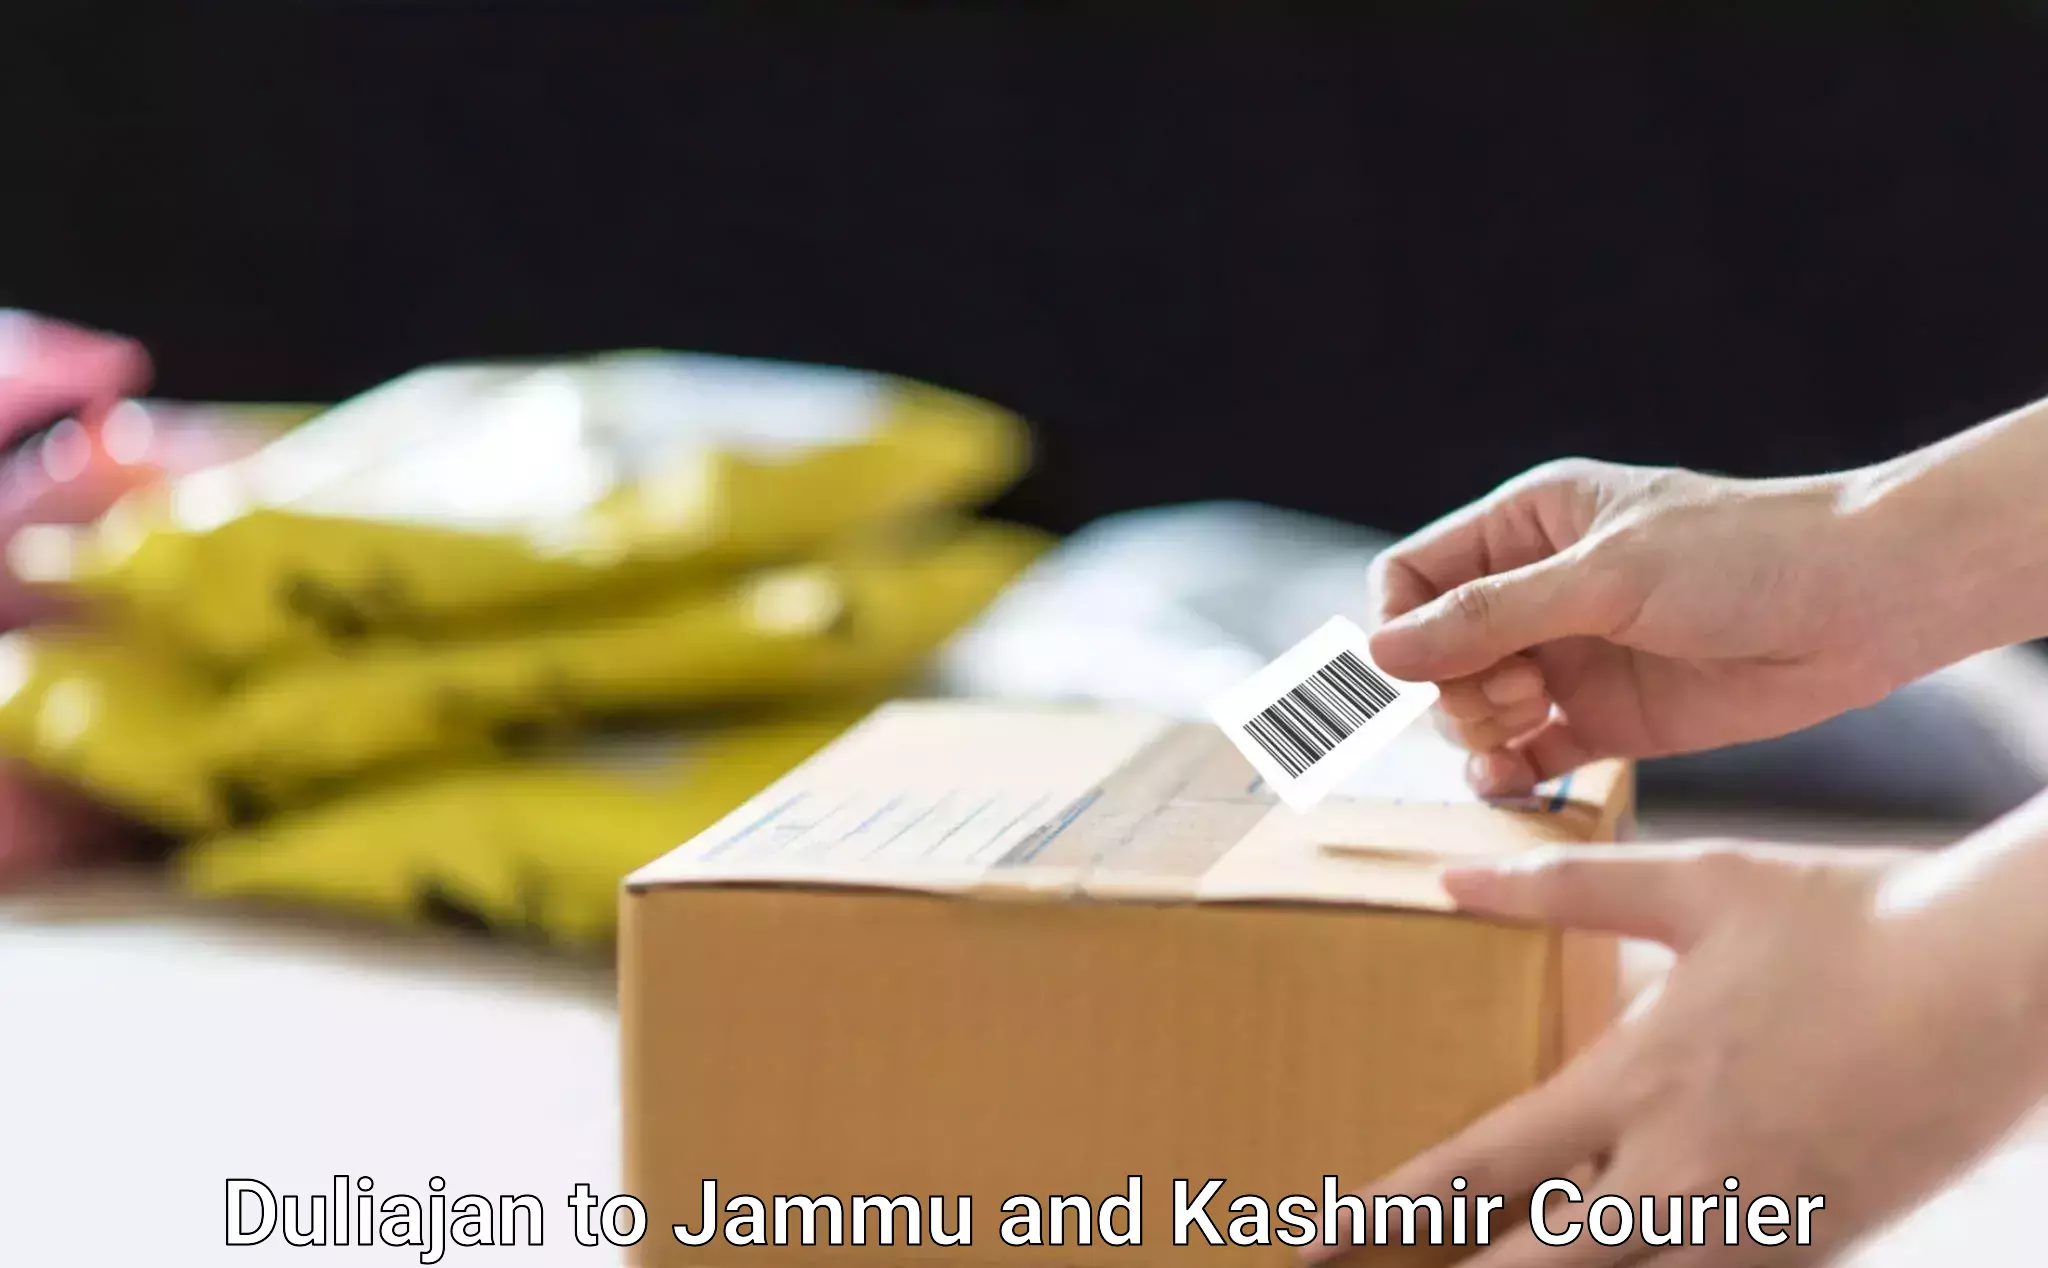 E-commerce fulfillment Duliajan to Srinagar Kashmir